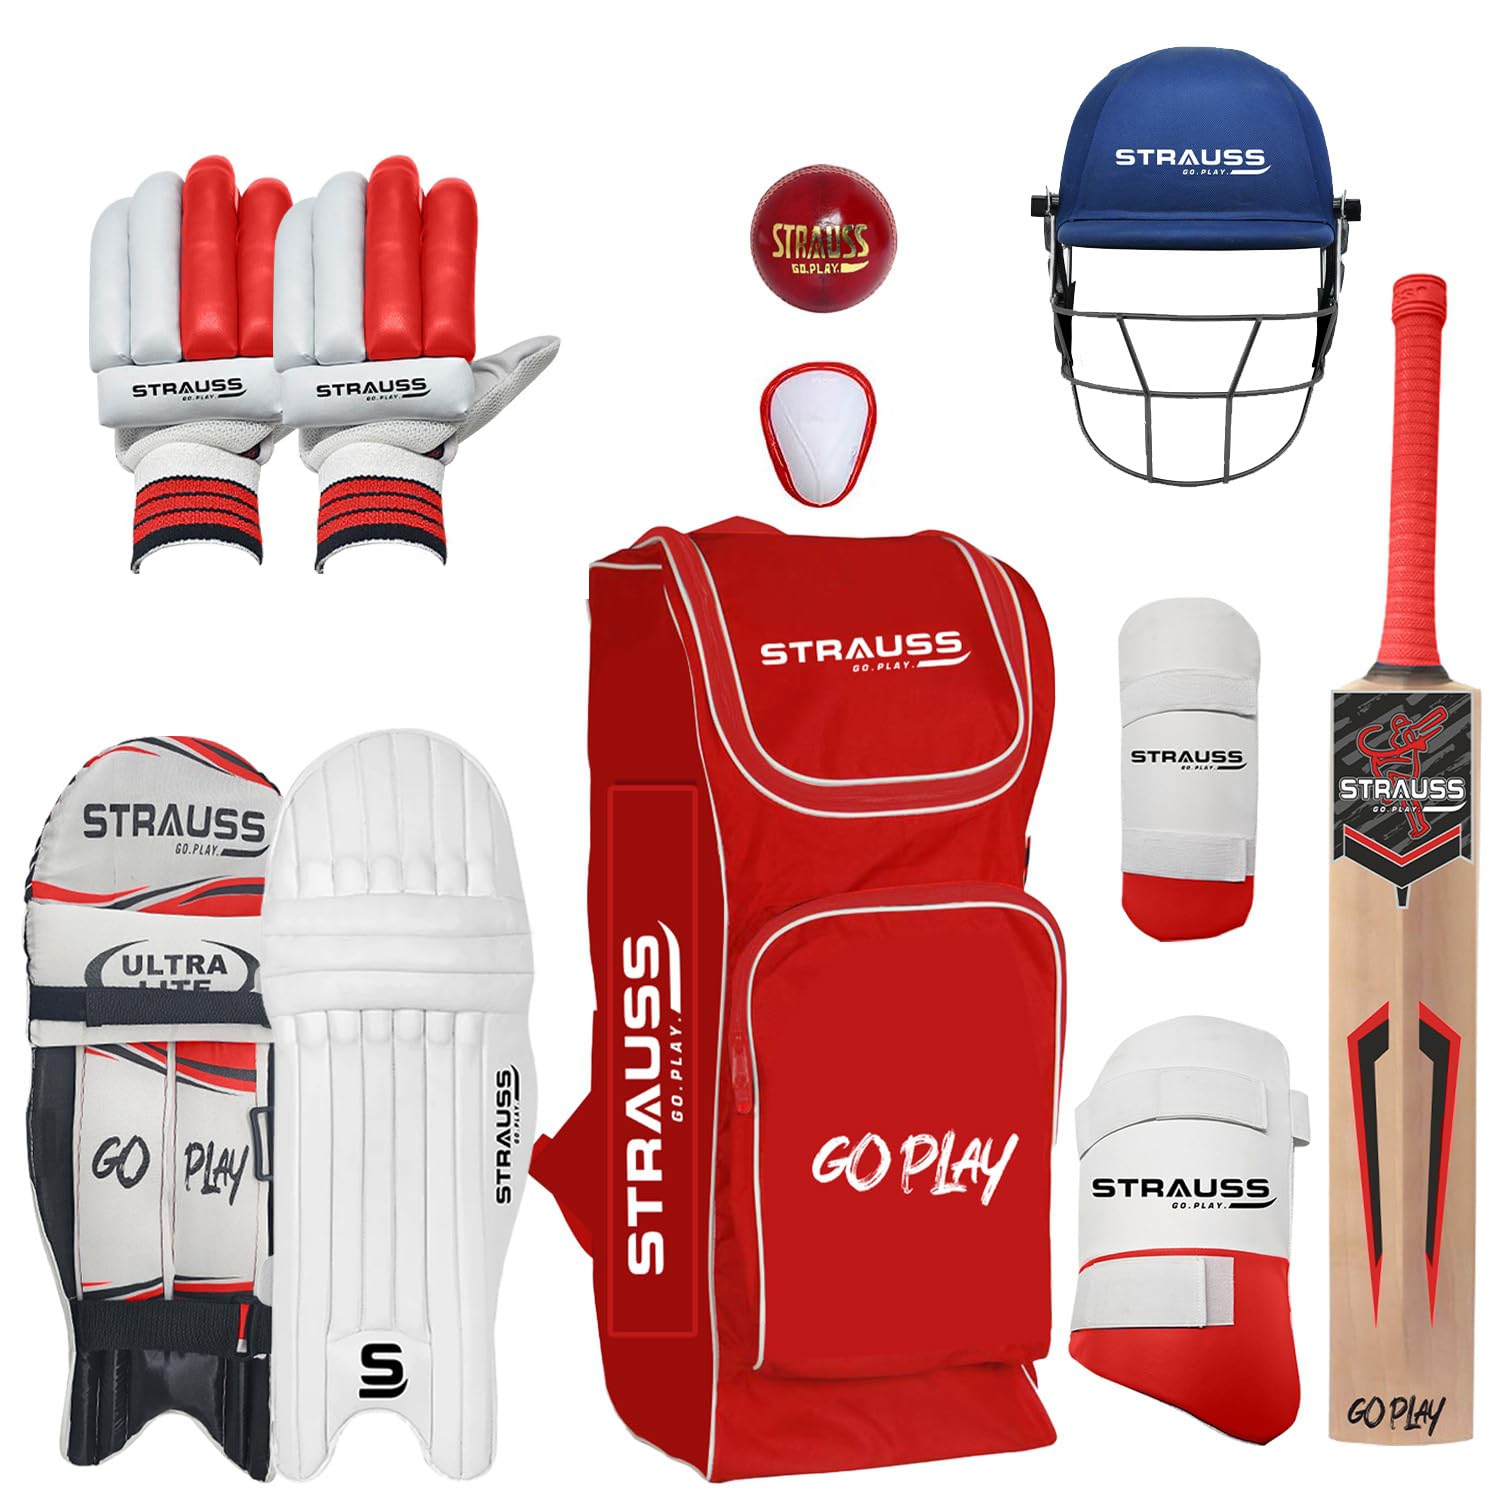 Strauss Kashmir Willow Cricket Kit Bag | Cricket Bat Set Combo with A